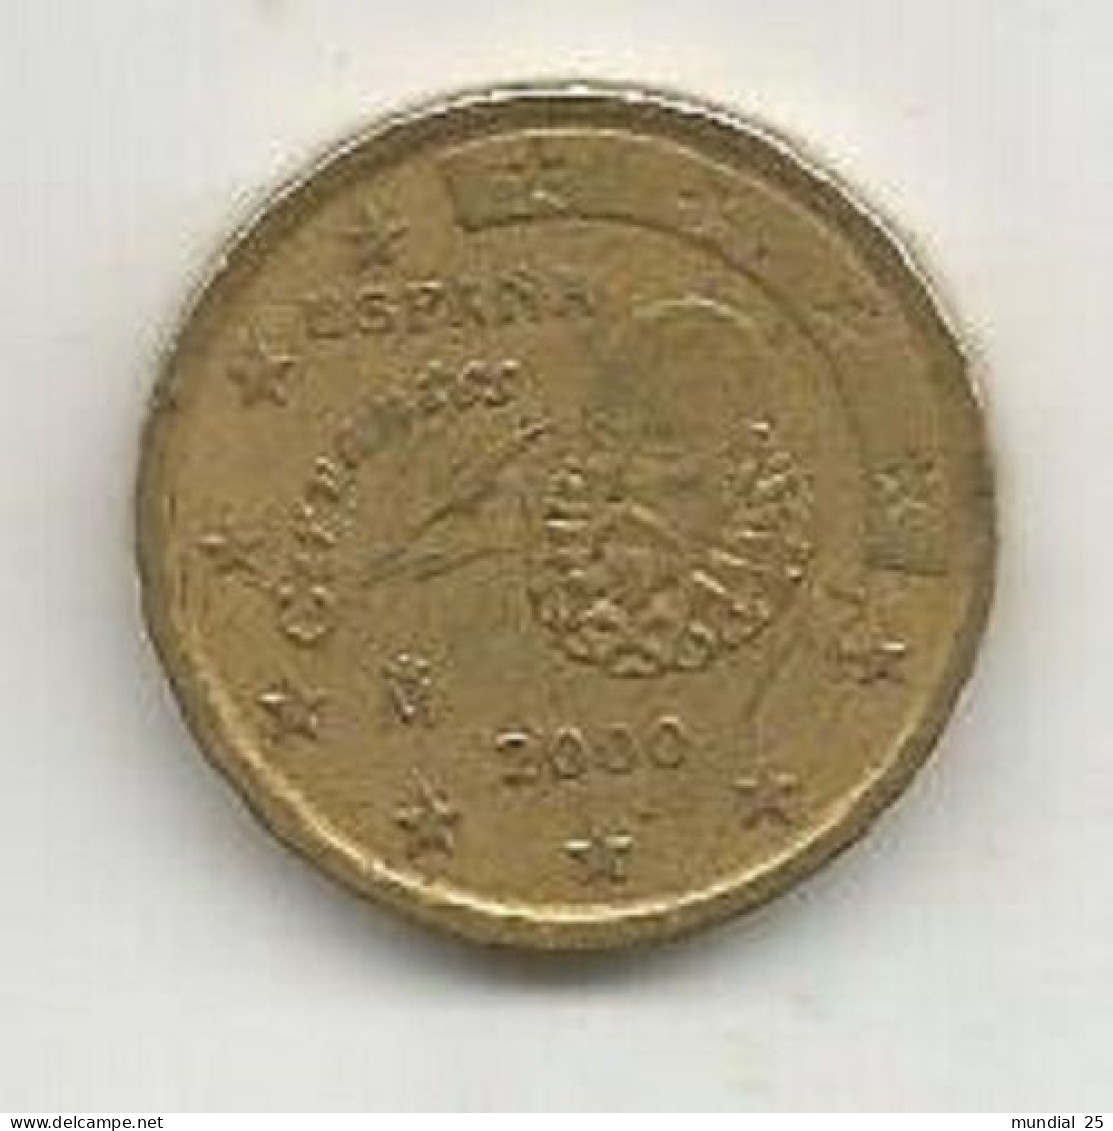 SPAIN 10 EURO CENT 2000 M - Spain